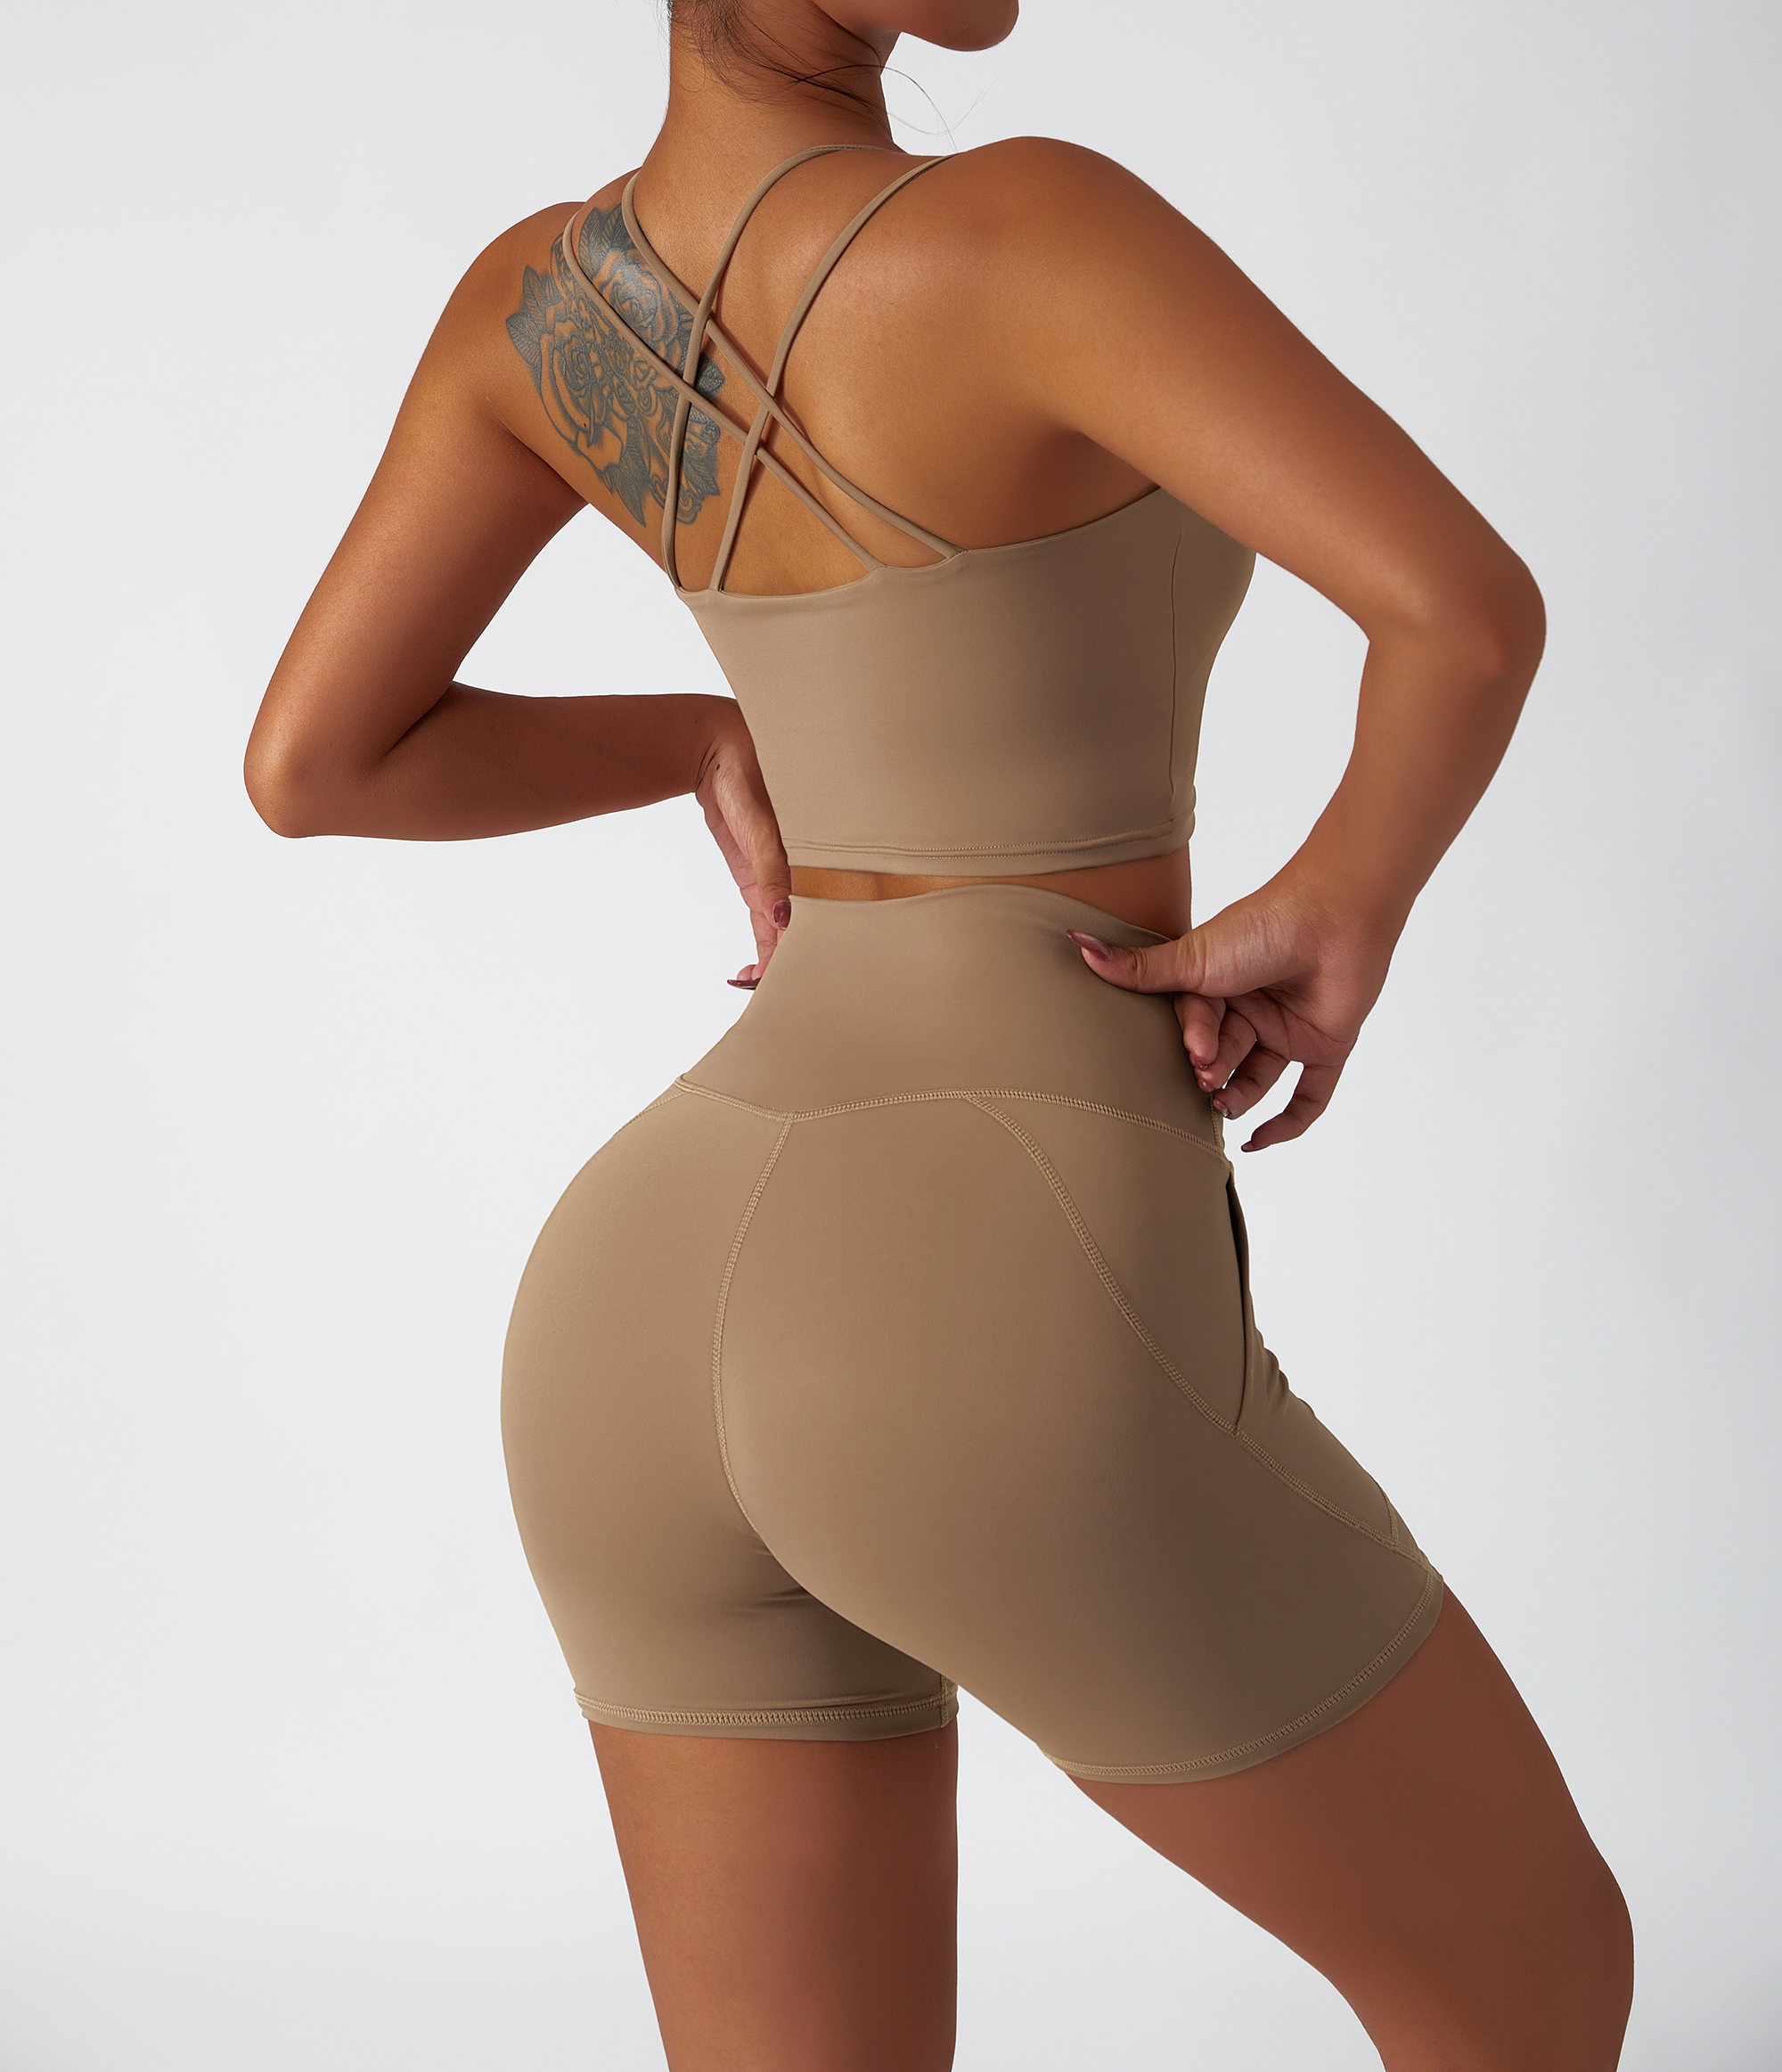 Hergymclothing brown sports bra and sports shorts set online shopping